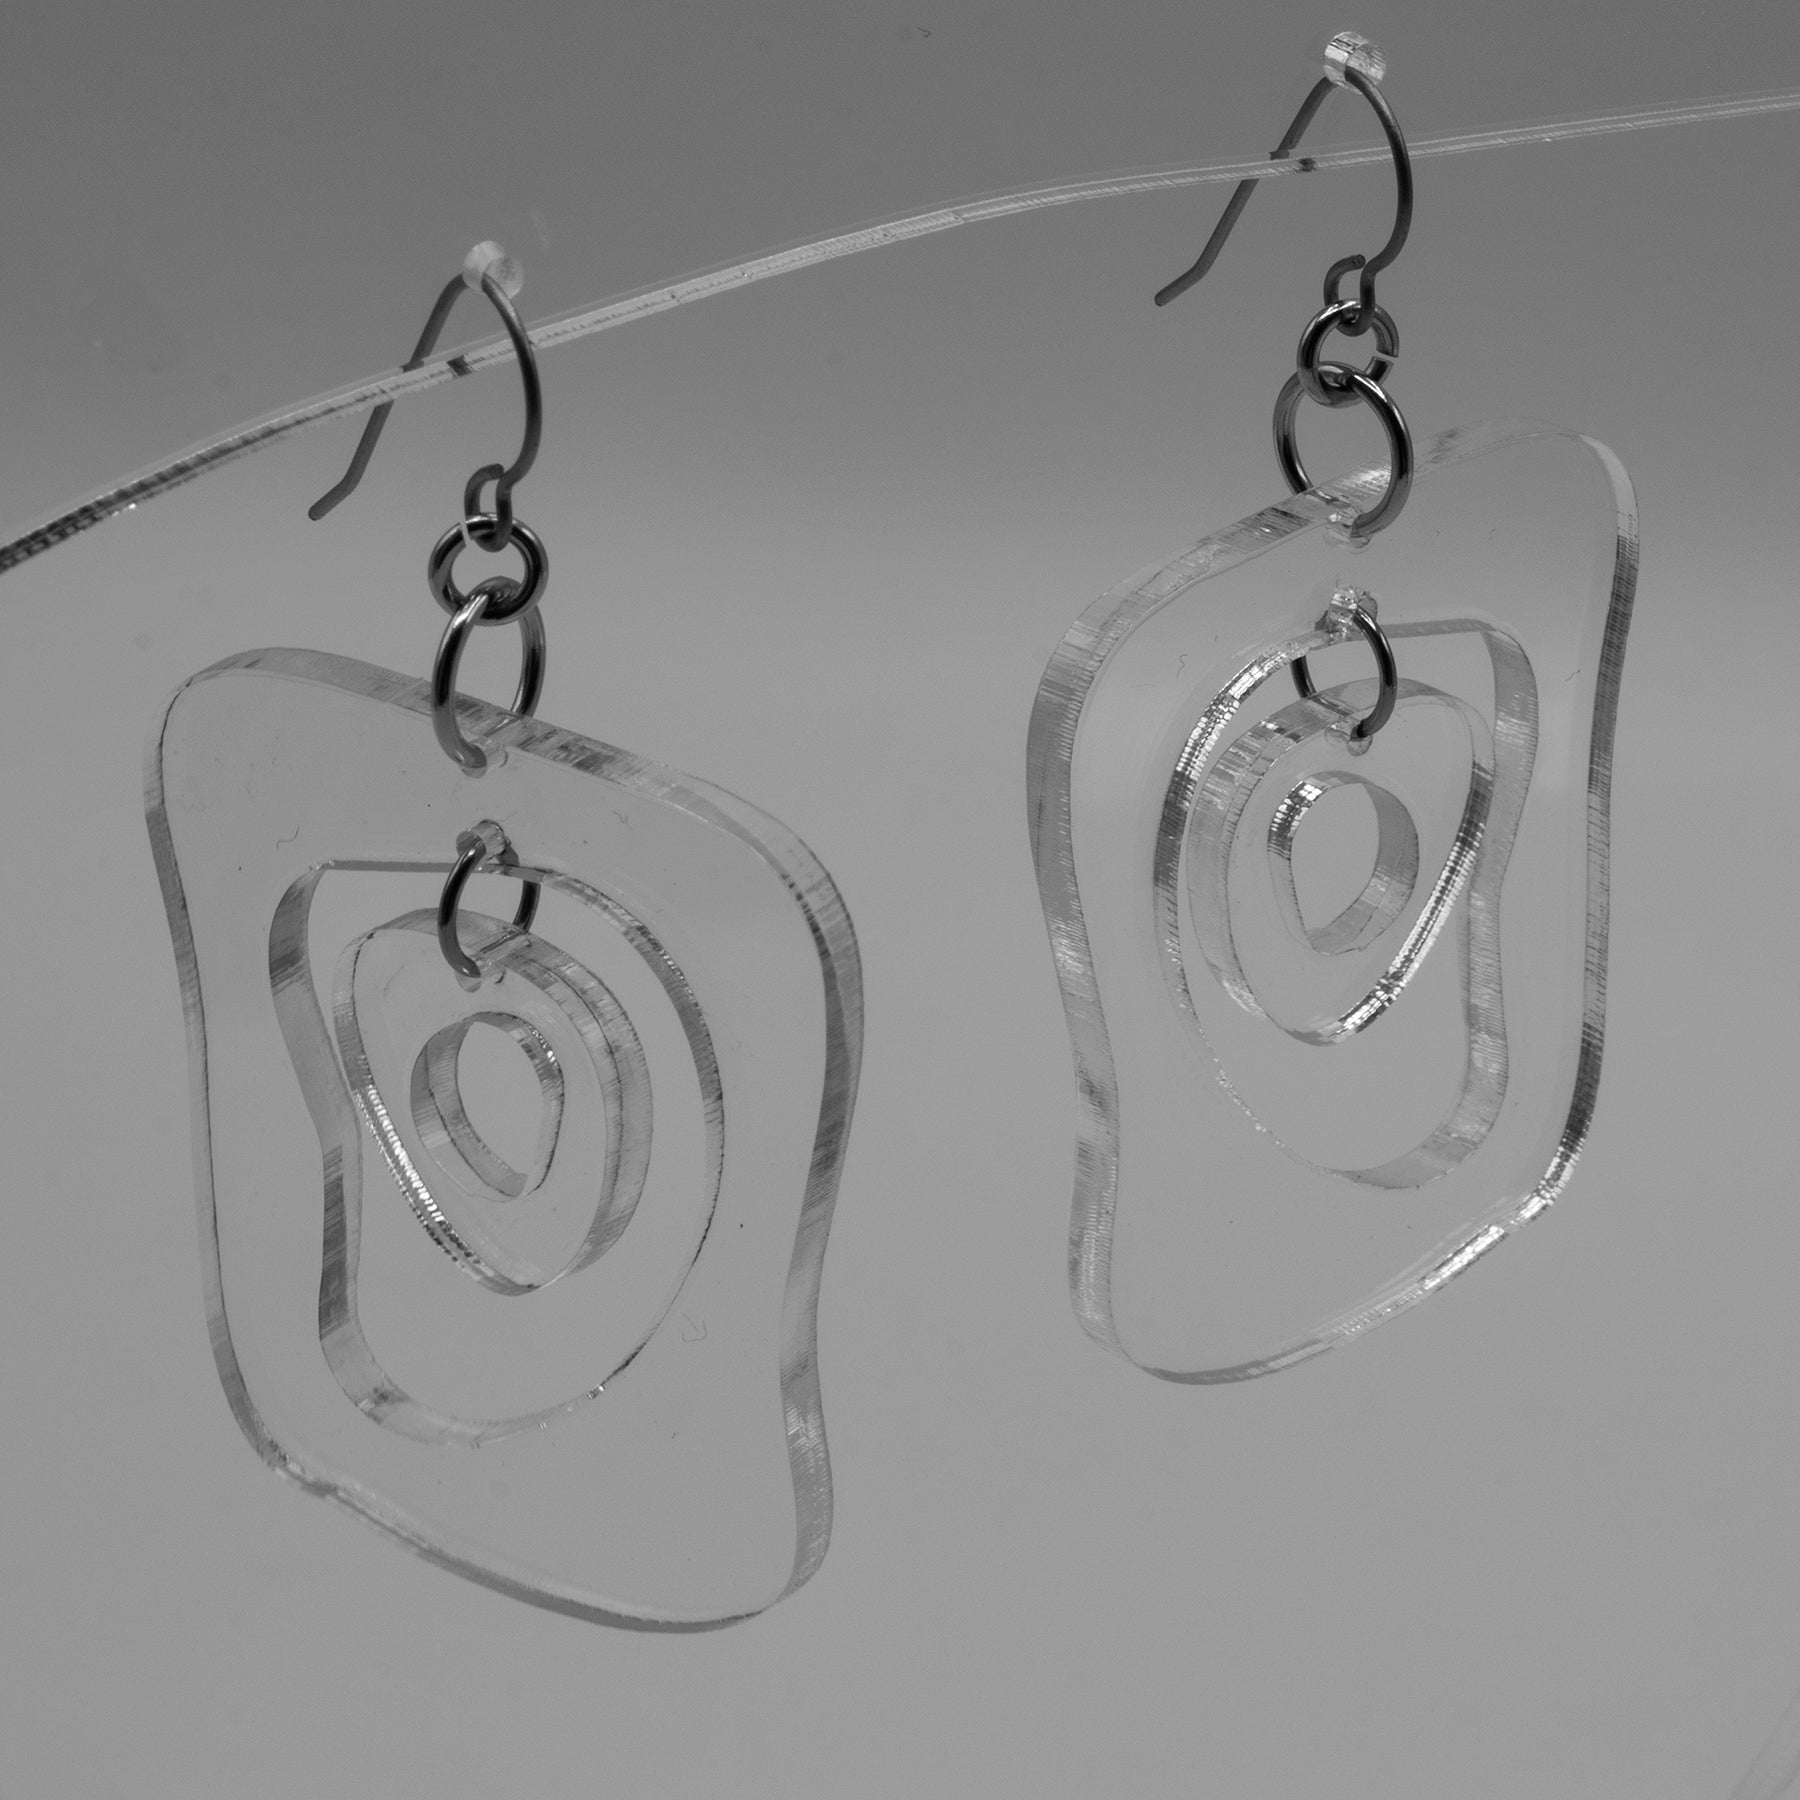 MODular Earrings - Mid Mod Statement Earrings in Clear Acrylic by AtomicMobiles.com - mid century inspired modern art dangle earrings